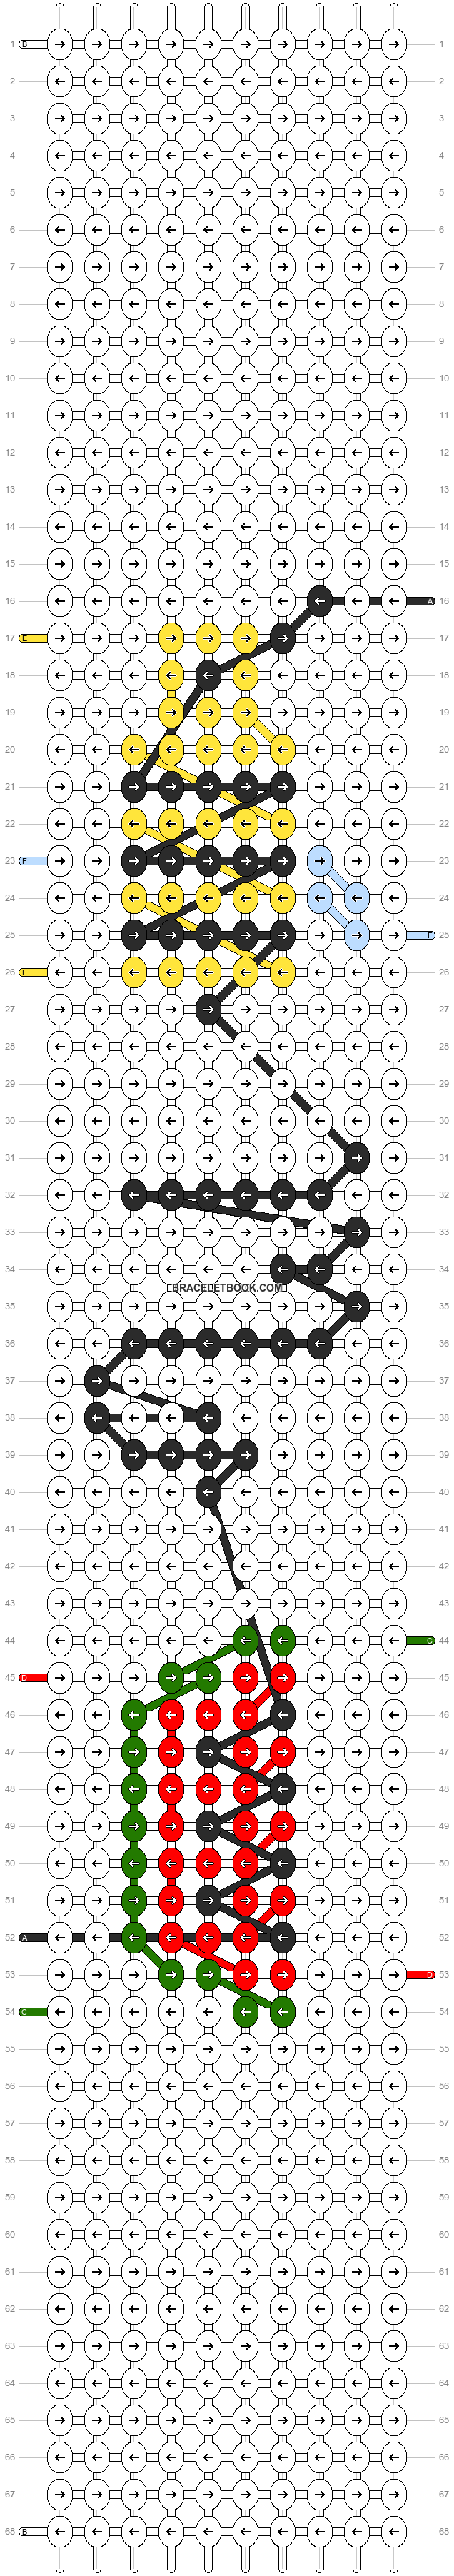 Alpha pattern #84702 pattern